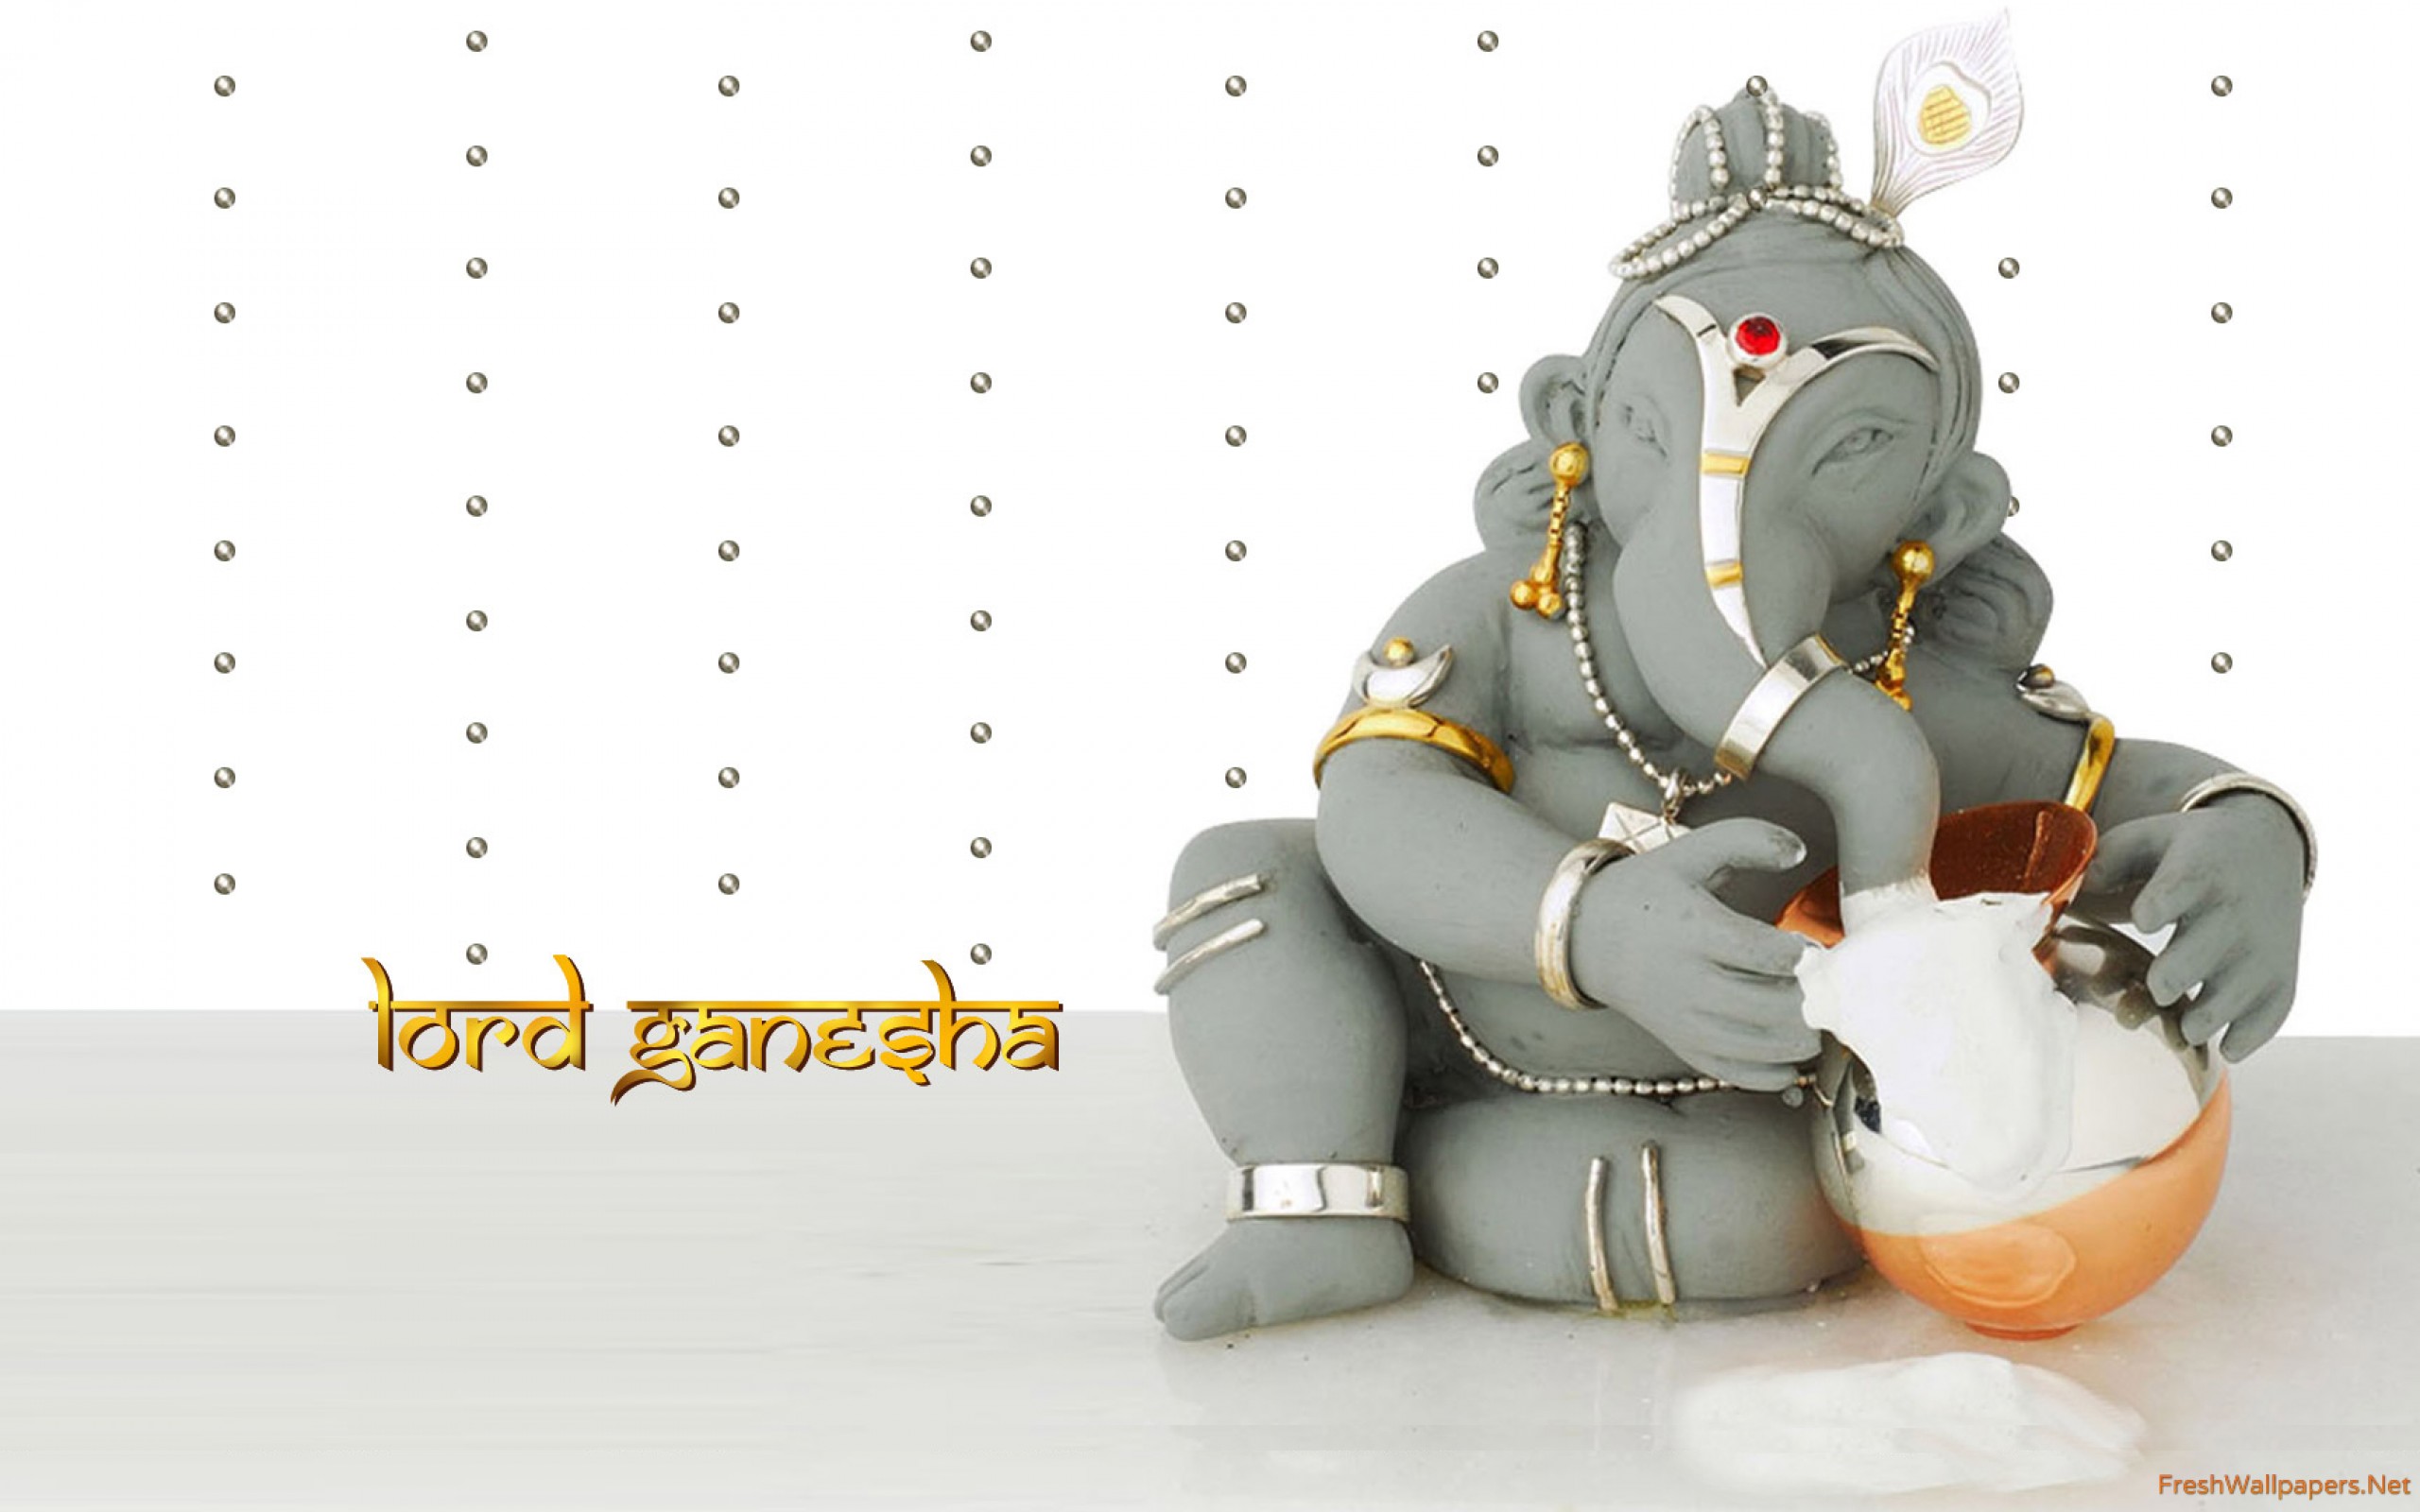 Laptop Ganesh Desktop Wallpaper Of God - 2560x1600 Wallpaper 